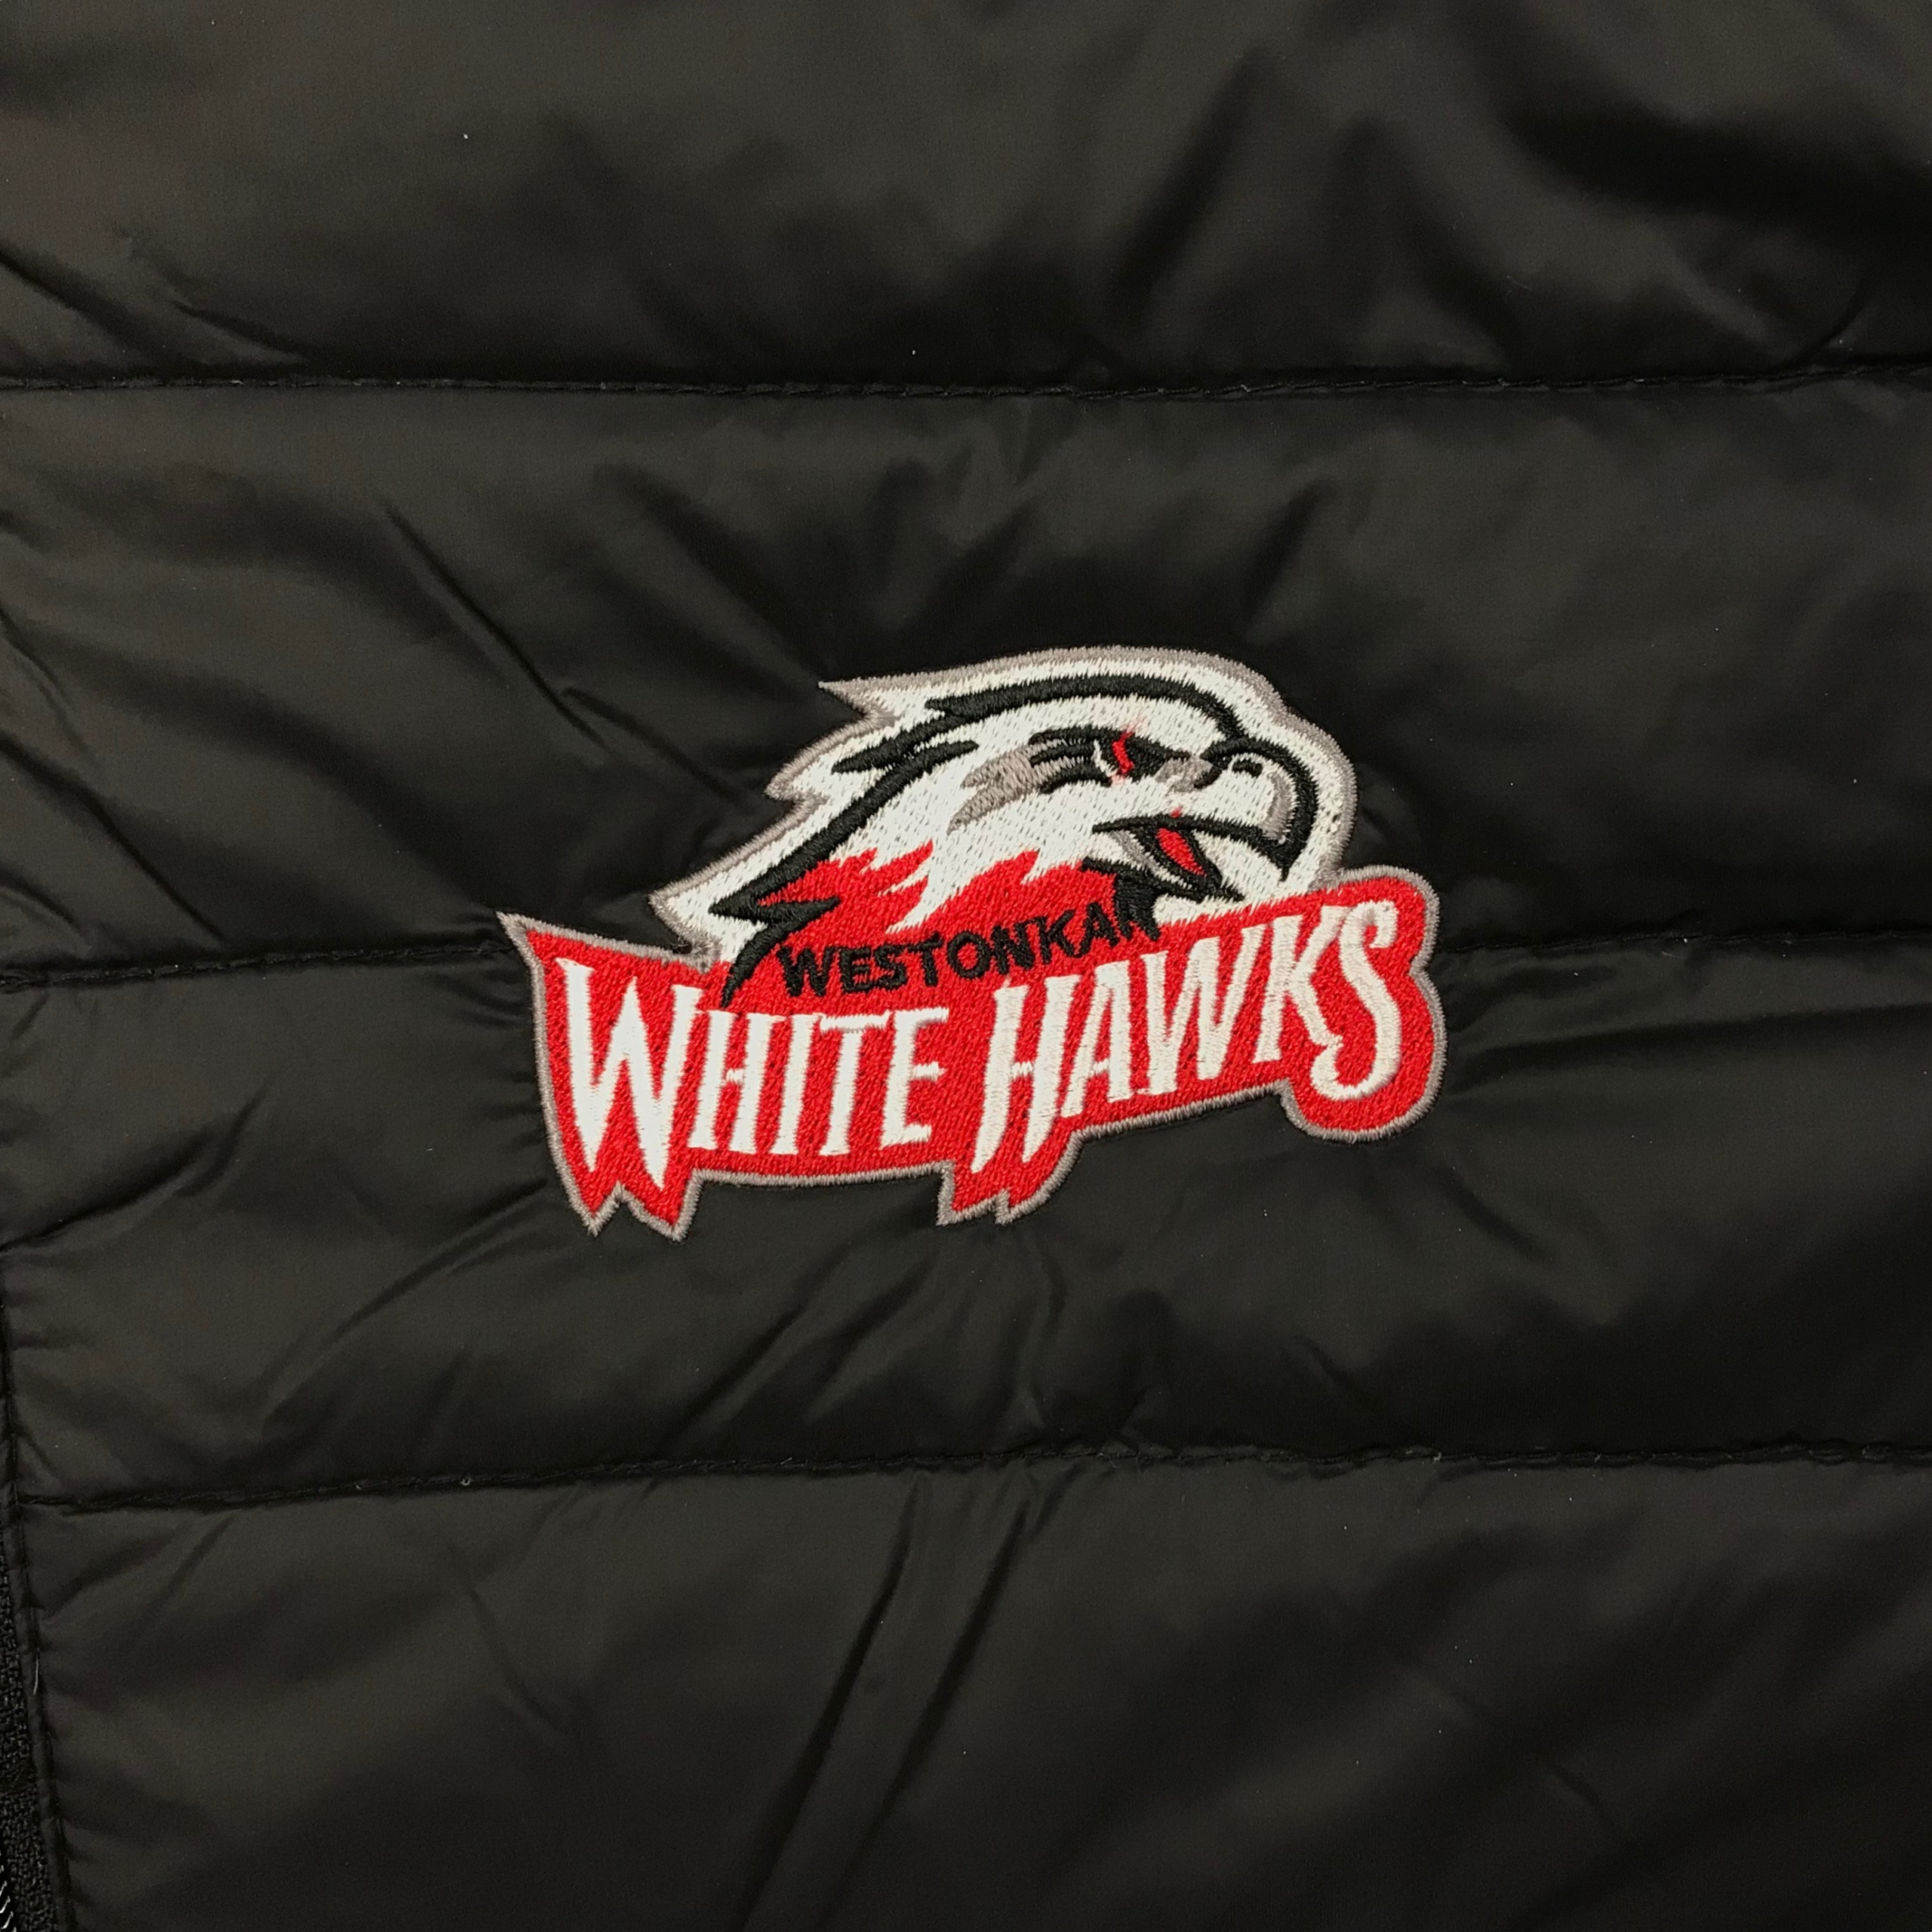 MWT - Ladies WESTONKA White Hawks 32 Degrees Women's Packable Down Vest